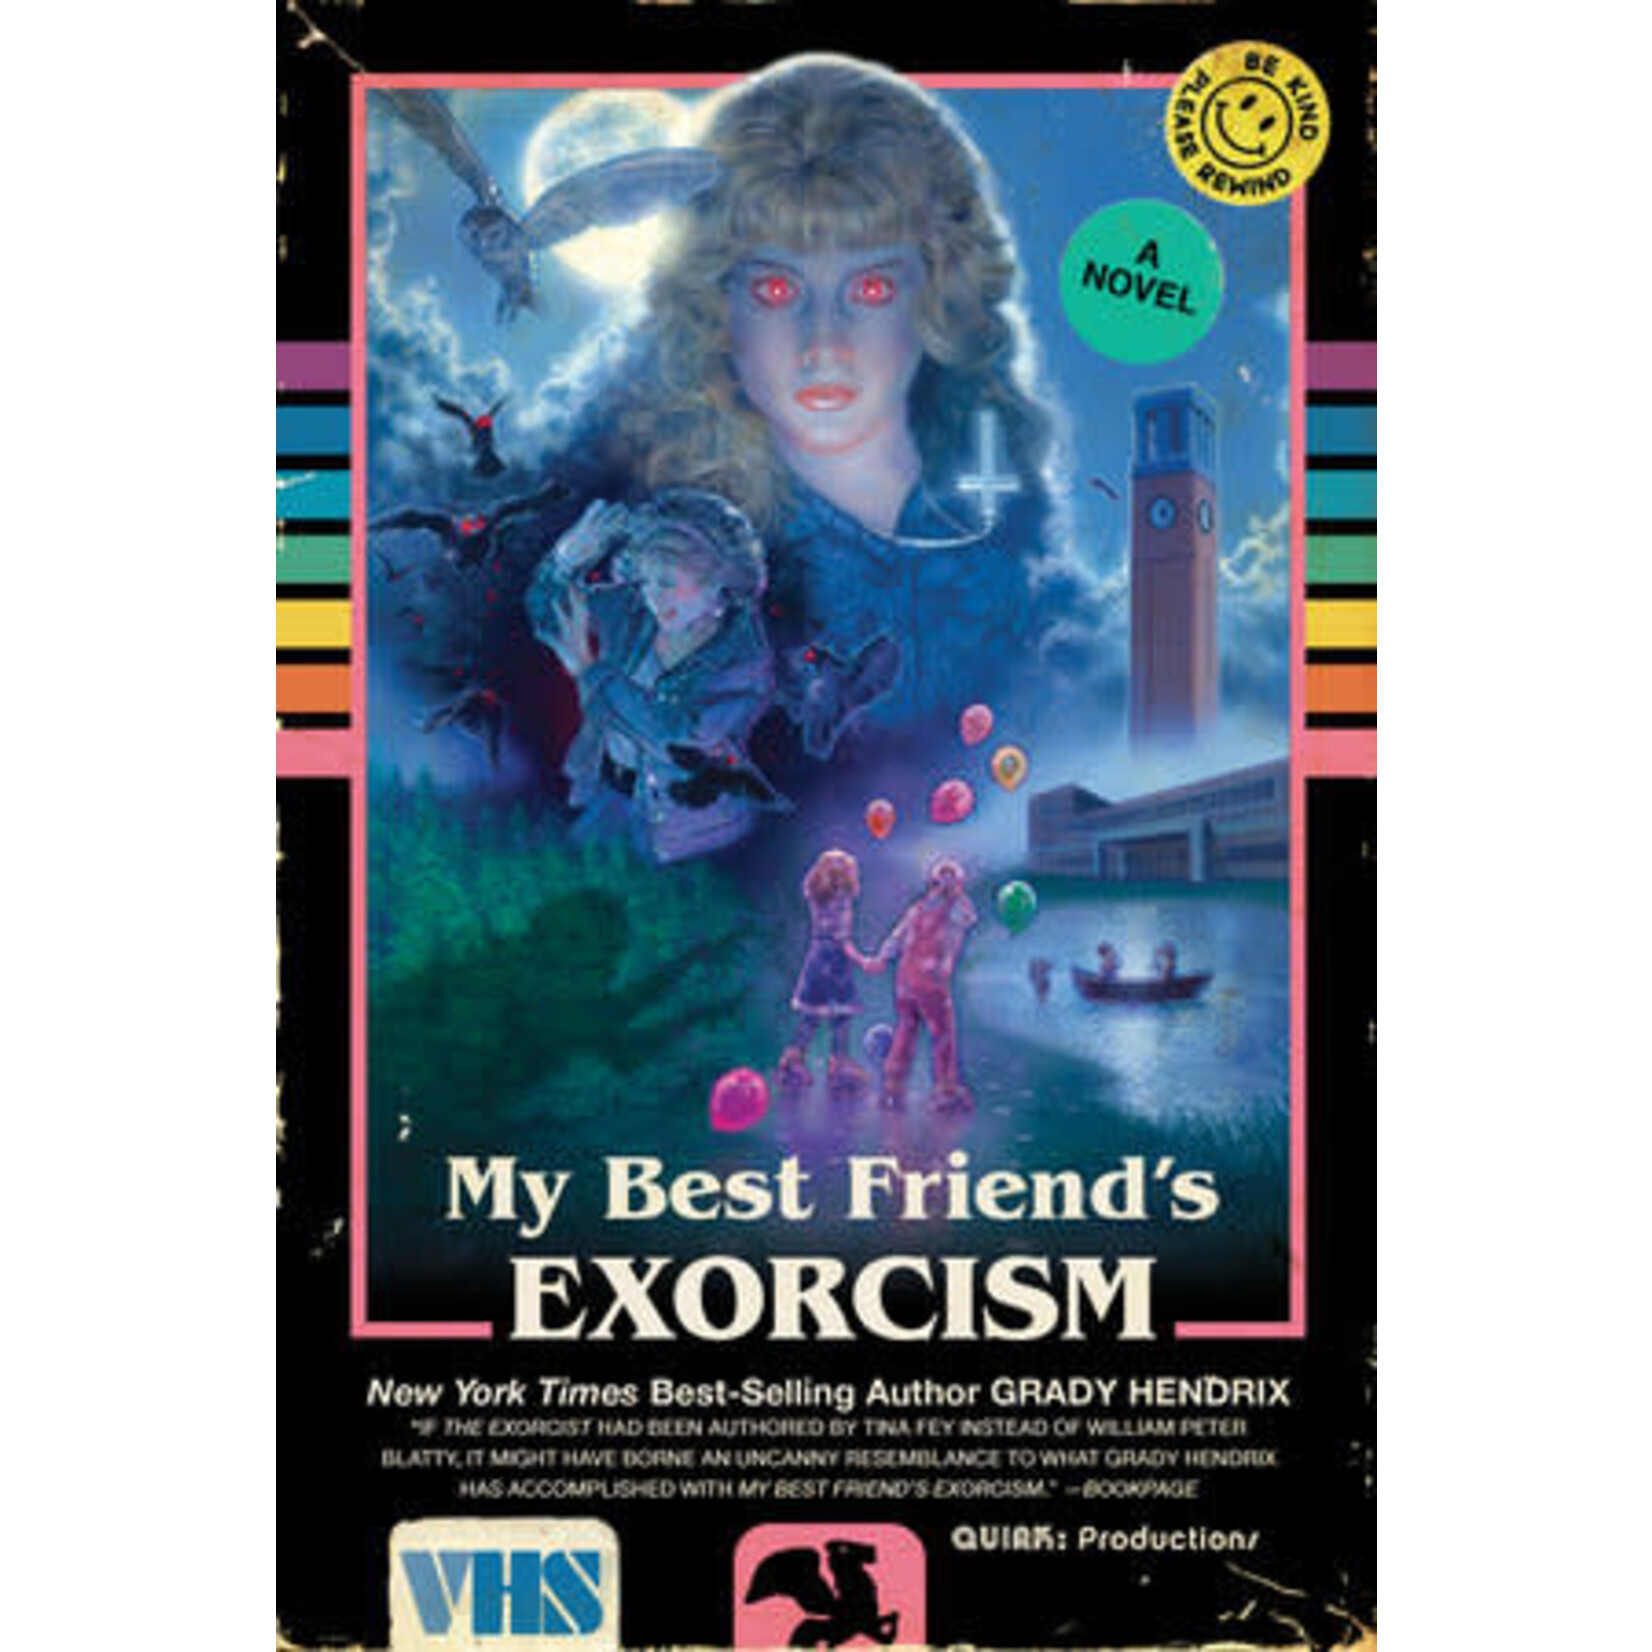 Grady Hendrix - My Best Friend’s Exorcism - Paperback (NEW)